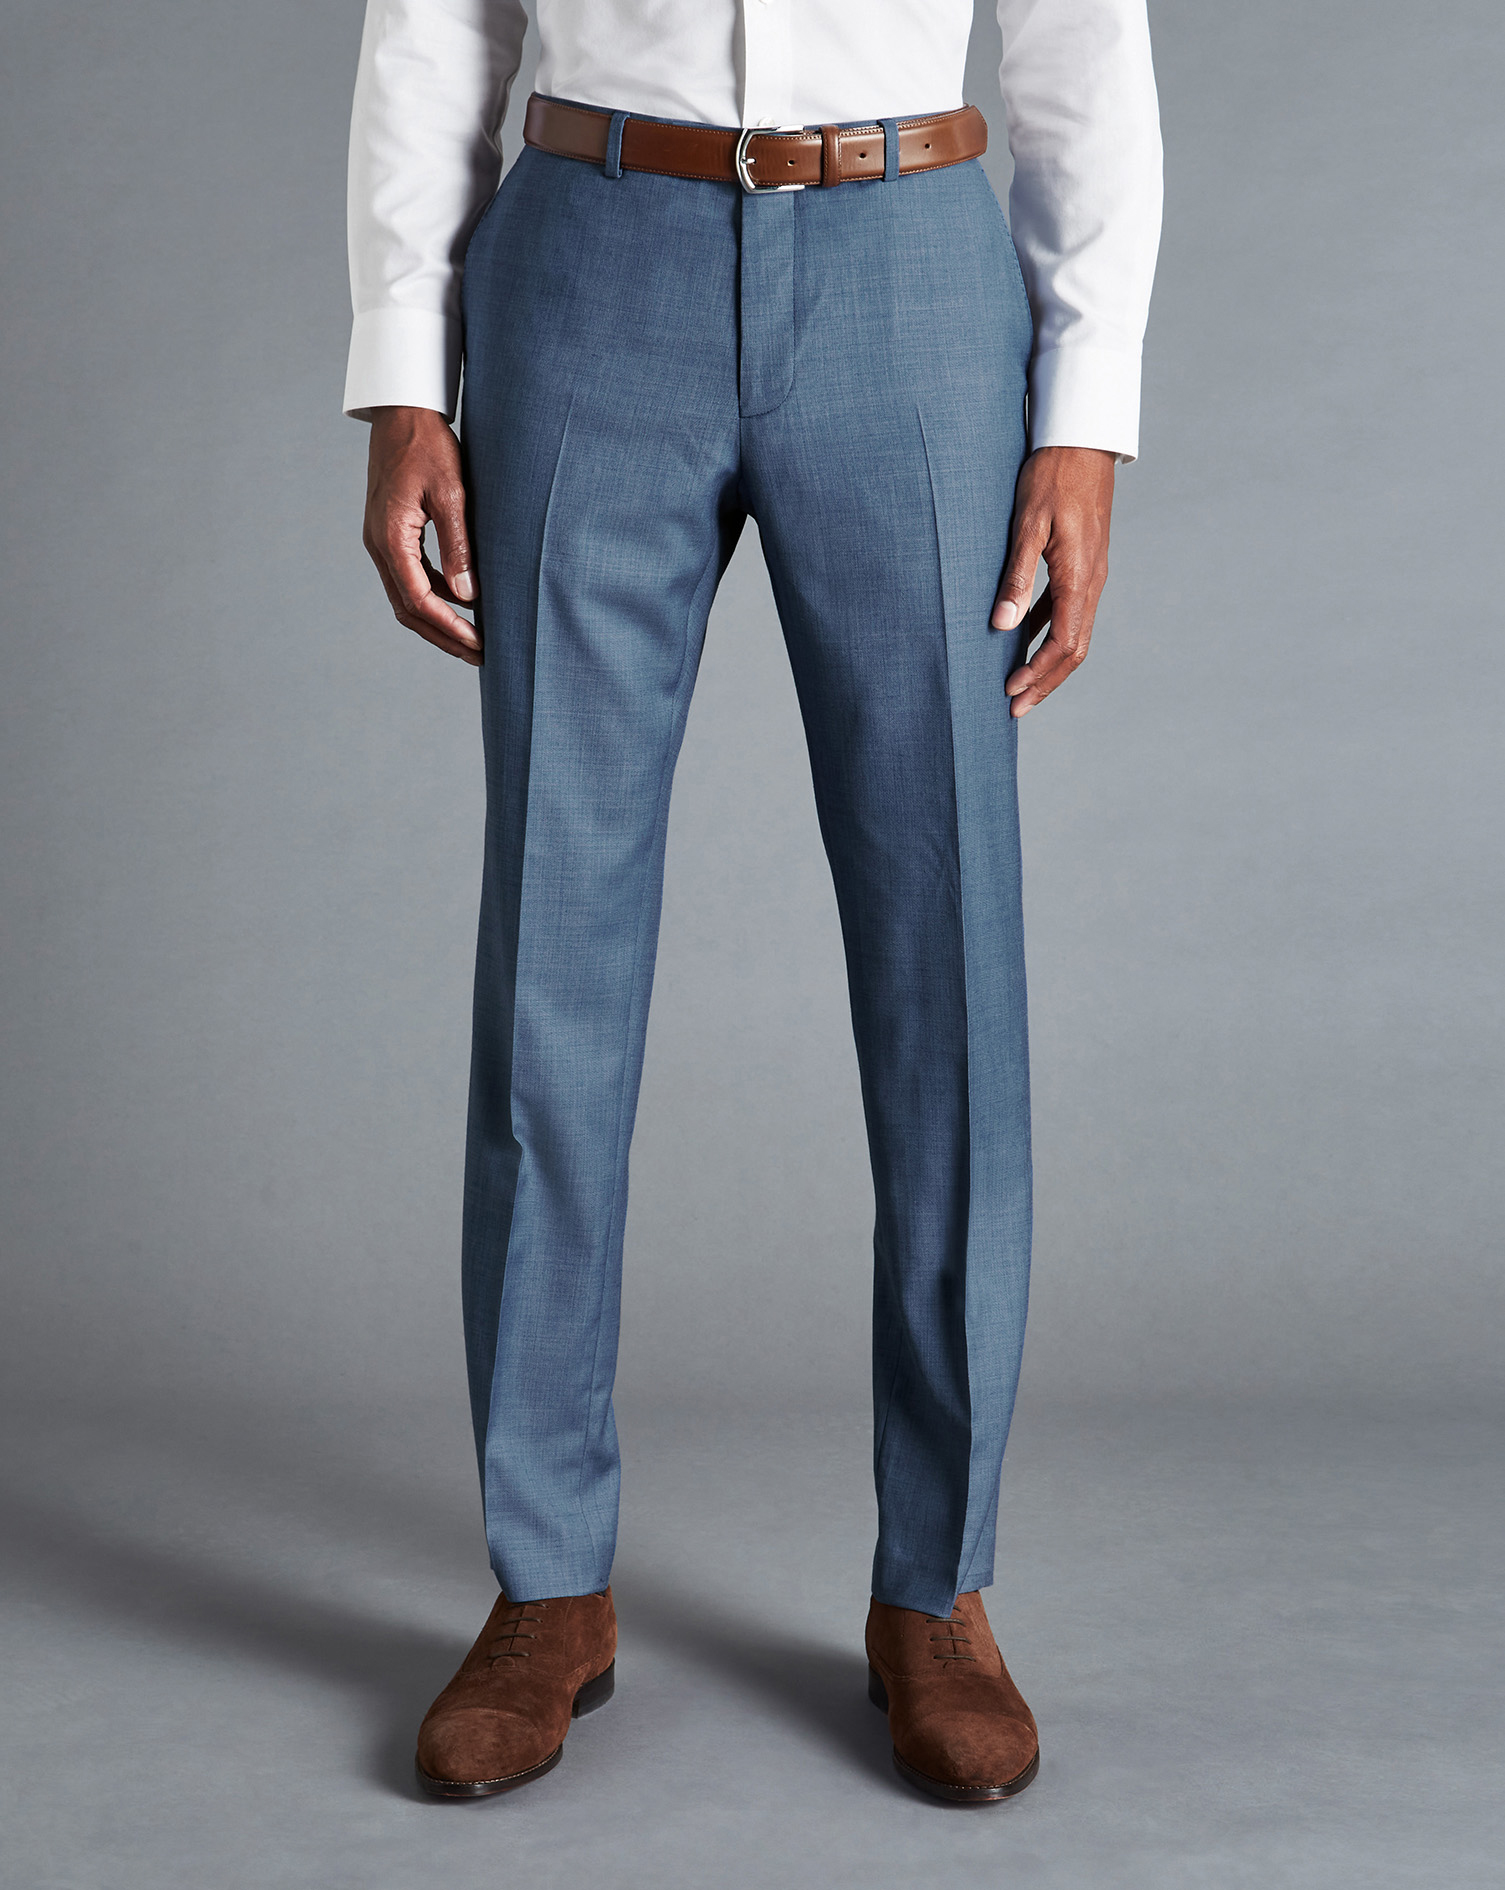 Men's Charles Tyrwhitt Sharkskin Suit Trousers - Cornflower Blue Size 36/38 Wool
